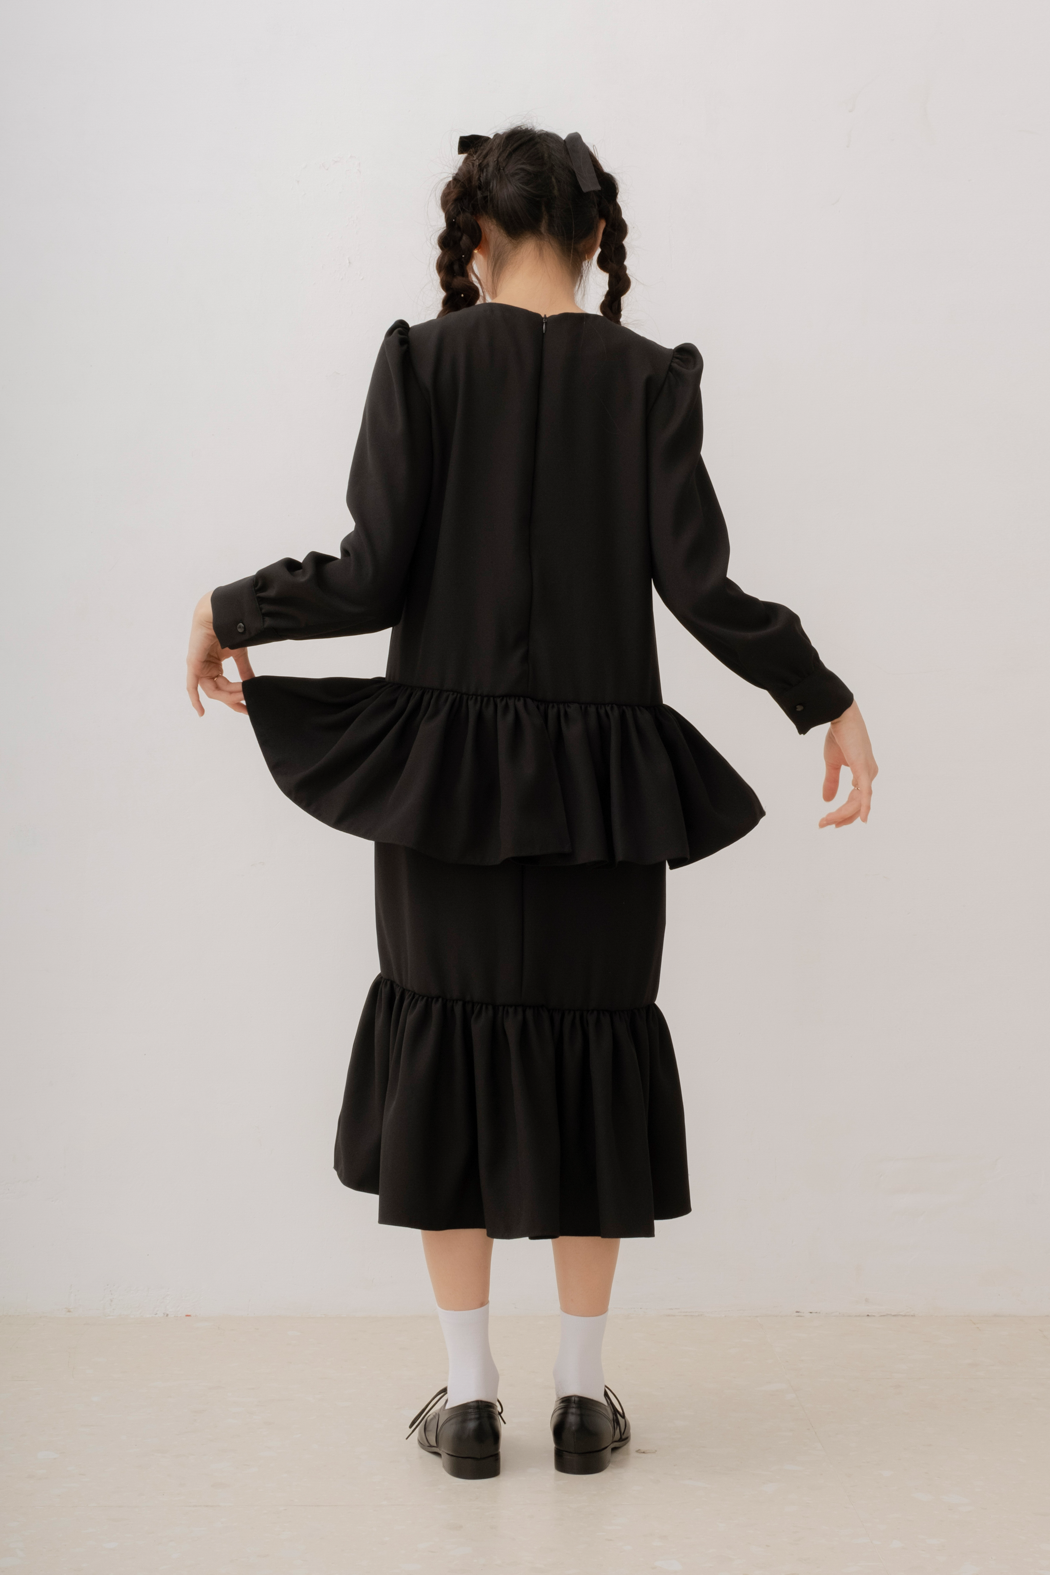 Bini Dress in Black (50% OFF)